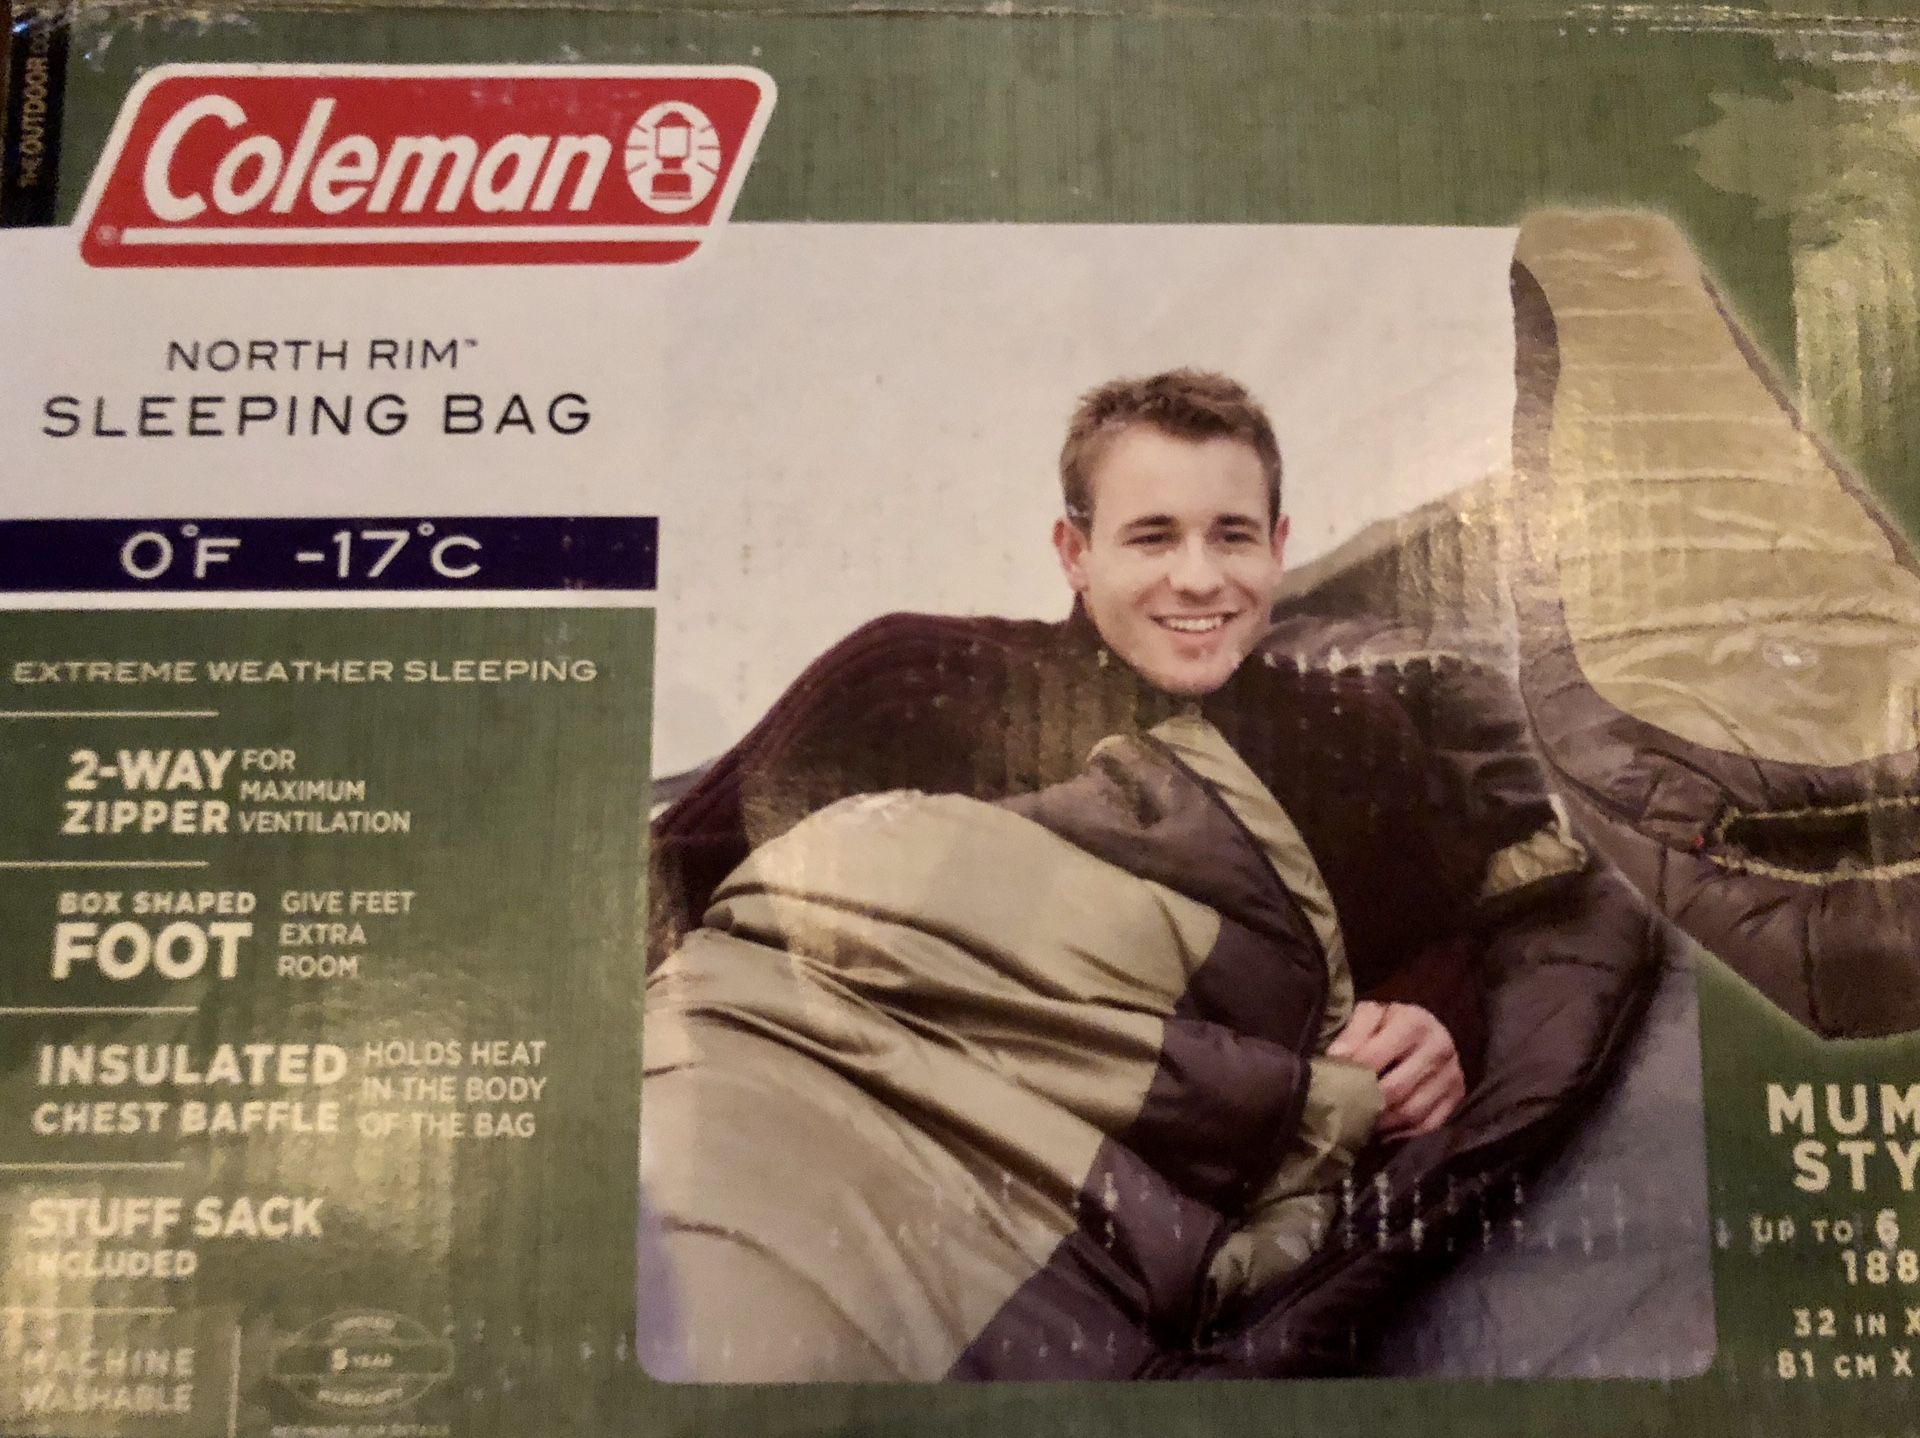 Coleman North rim sleeping bag